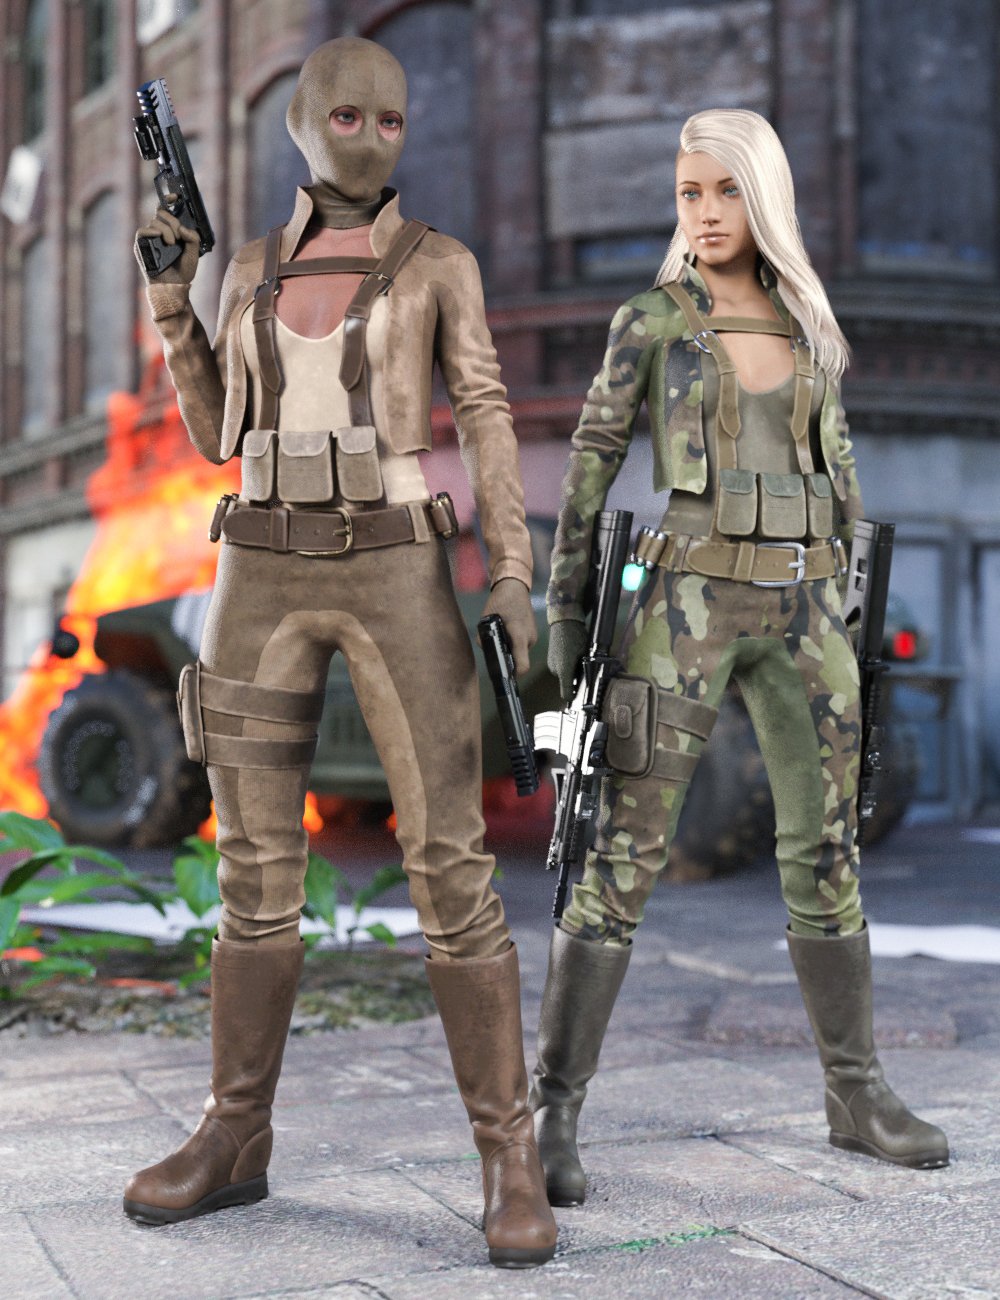 Rebel Militia Outfit for Genesis 8.1 Females by: Yura, 3D Models by Daz 3D